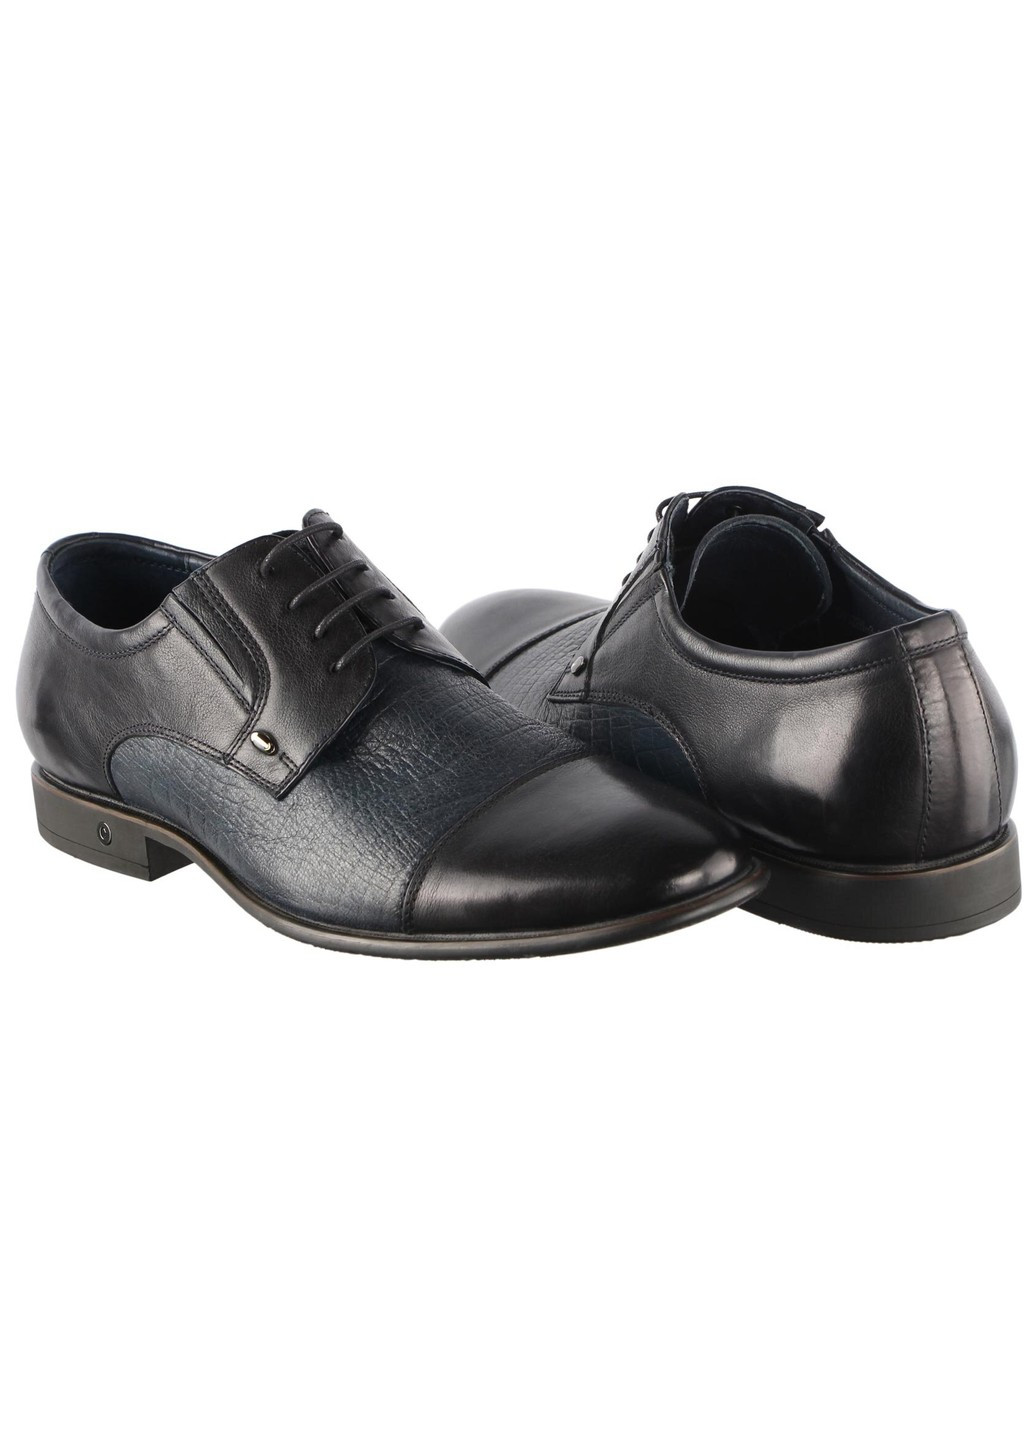 Синие мужские классические туфли 012013 Cosottinni на шнурках